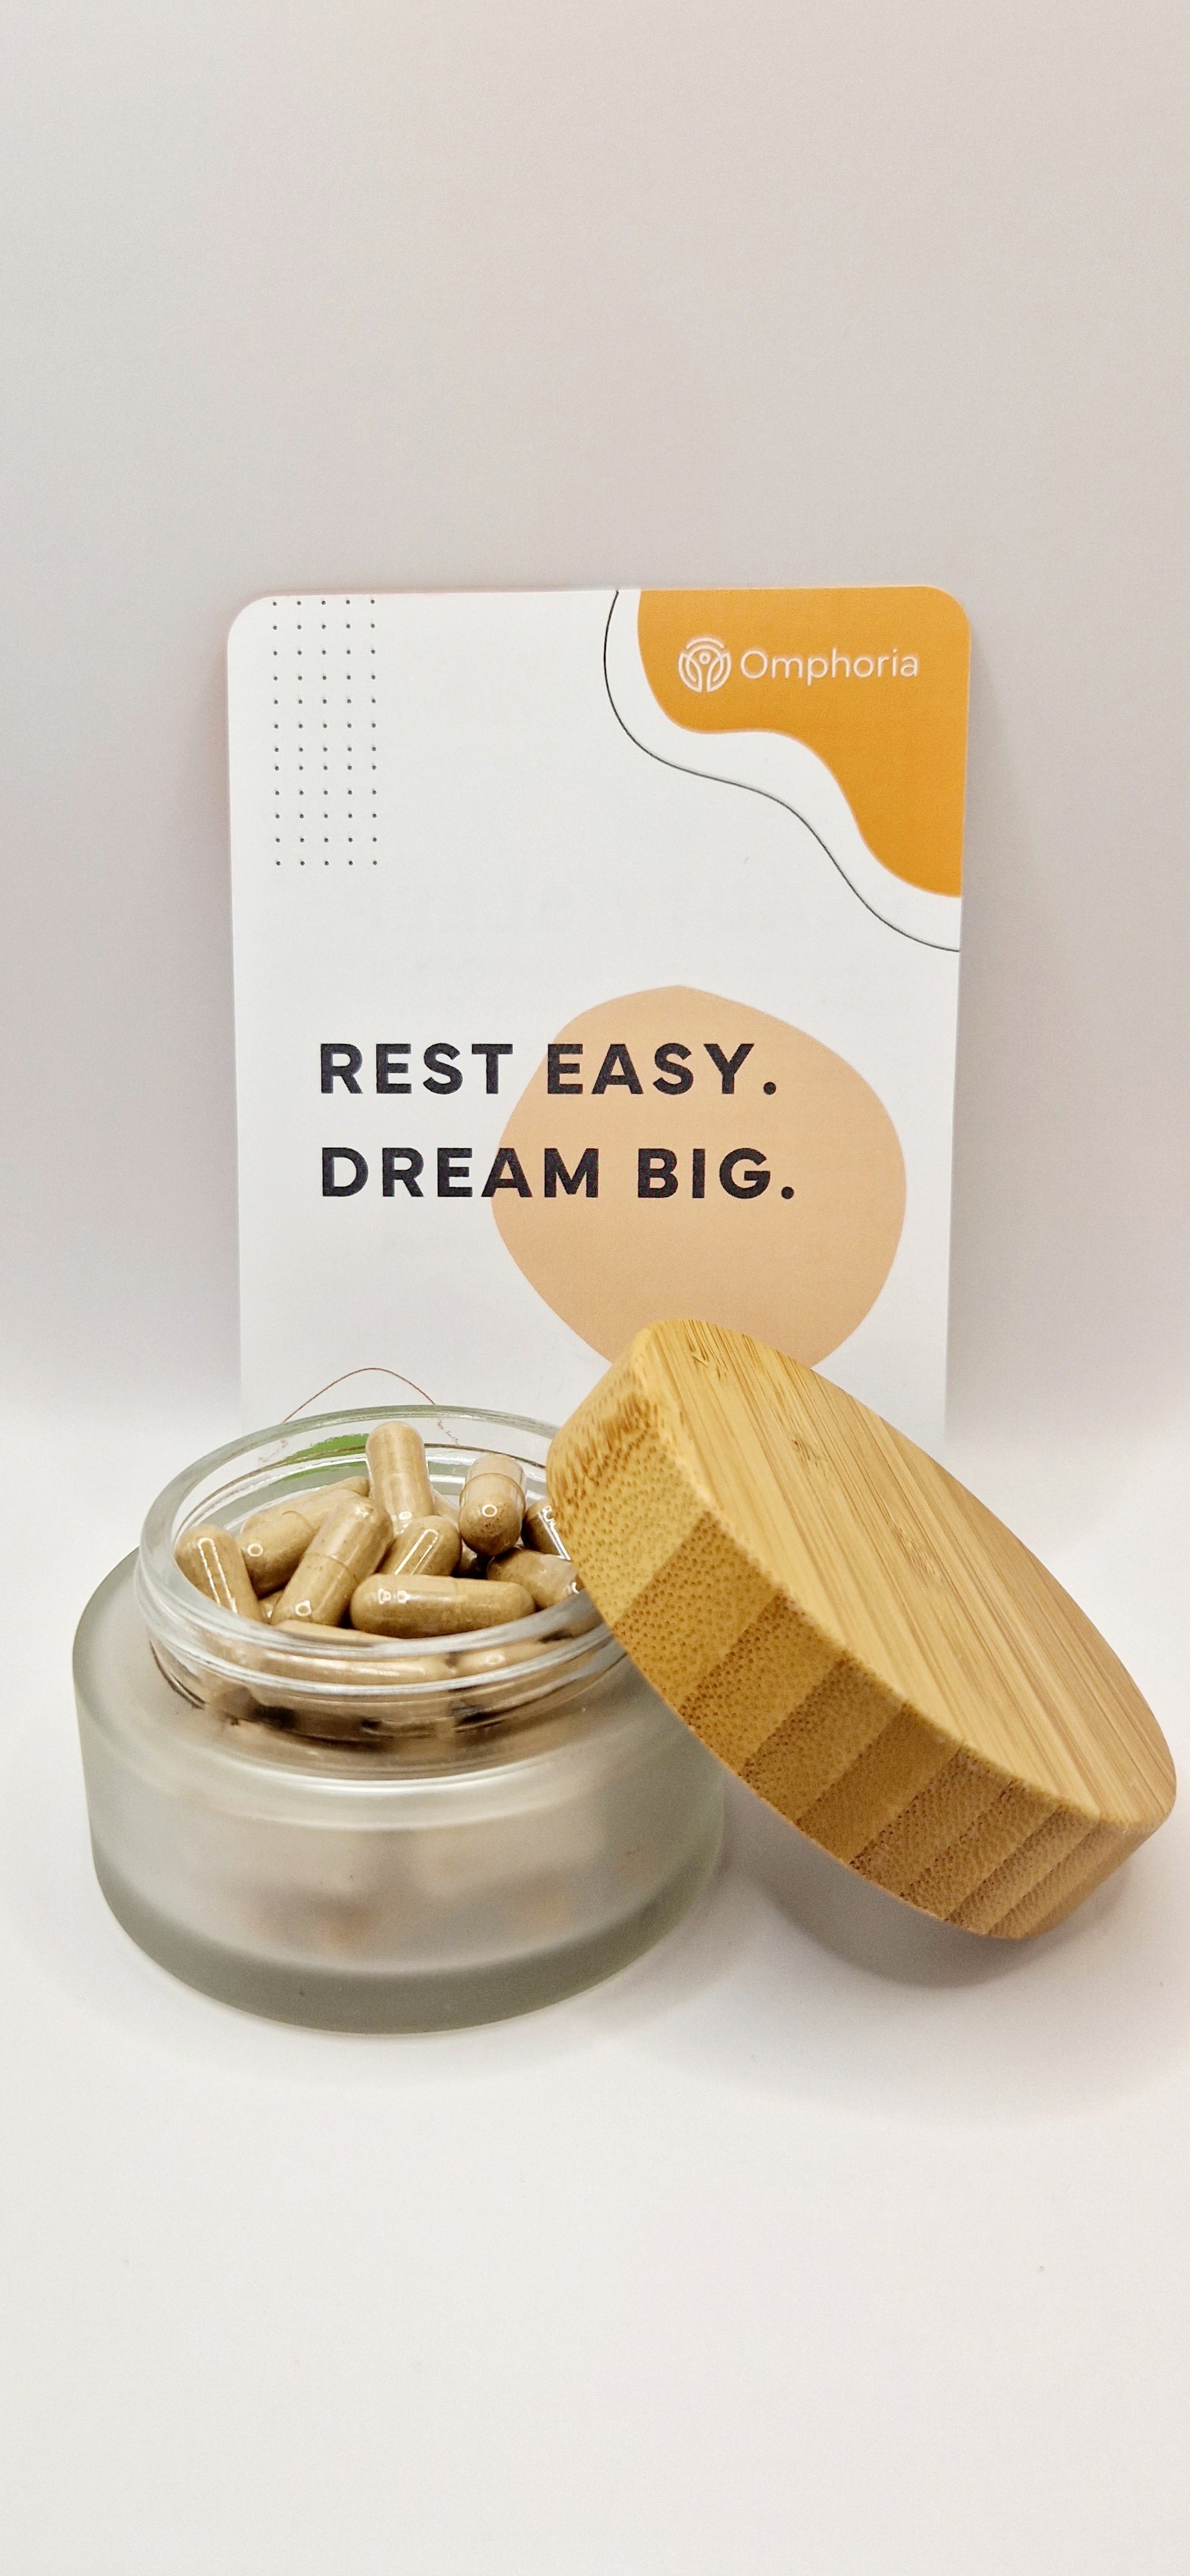 Beauty Sleep reishi medicinal mushroom supplement, flyer